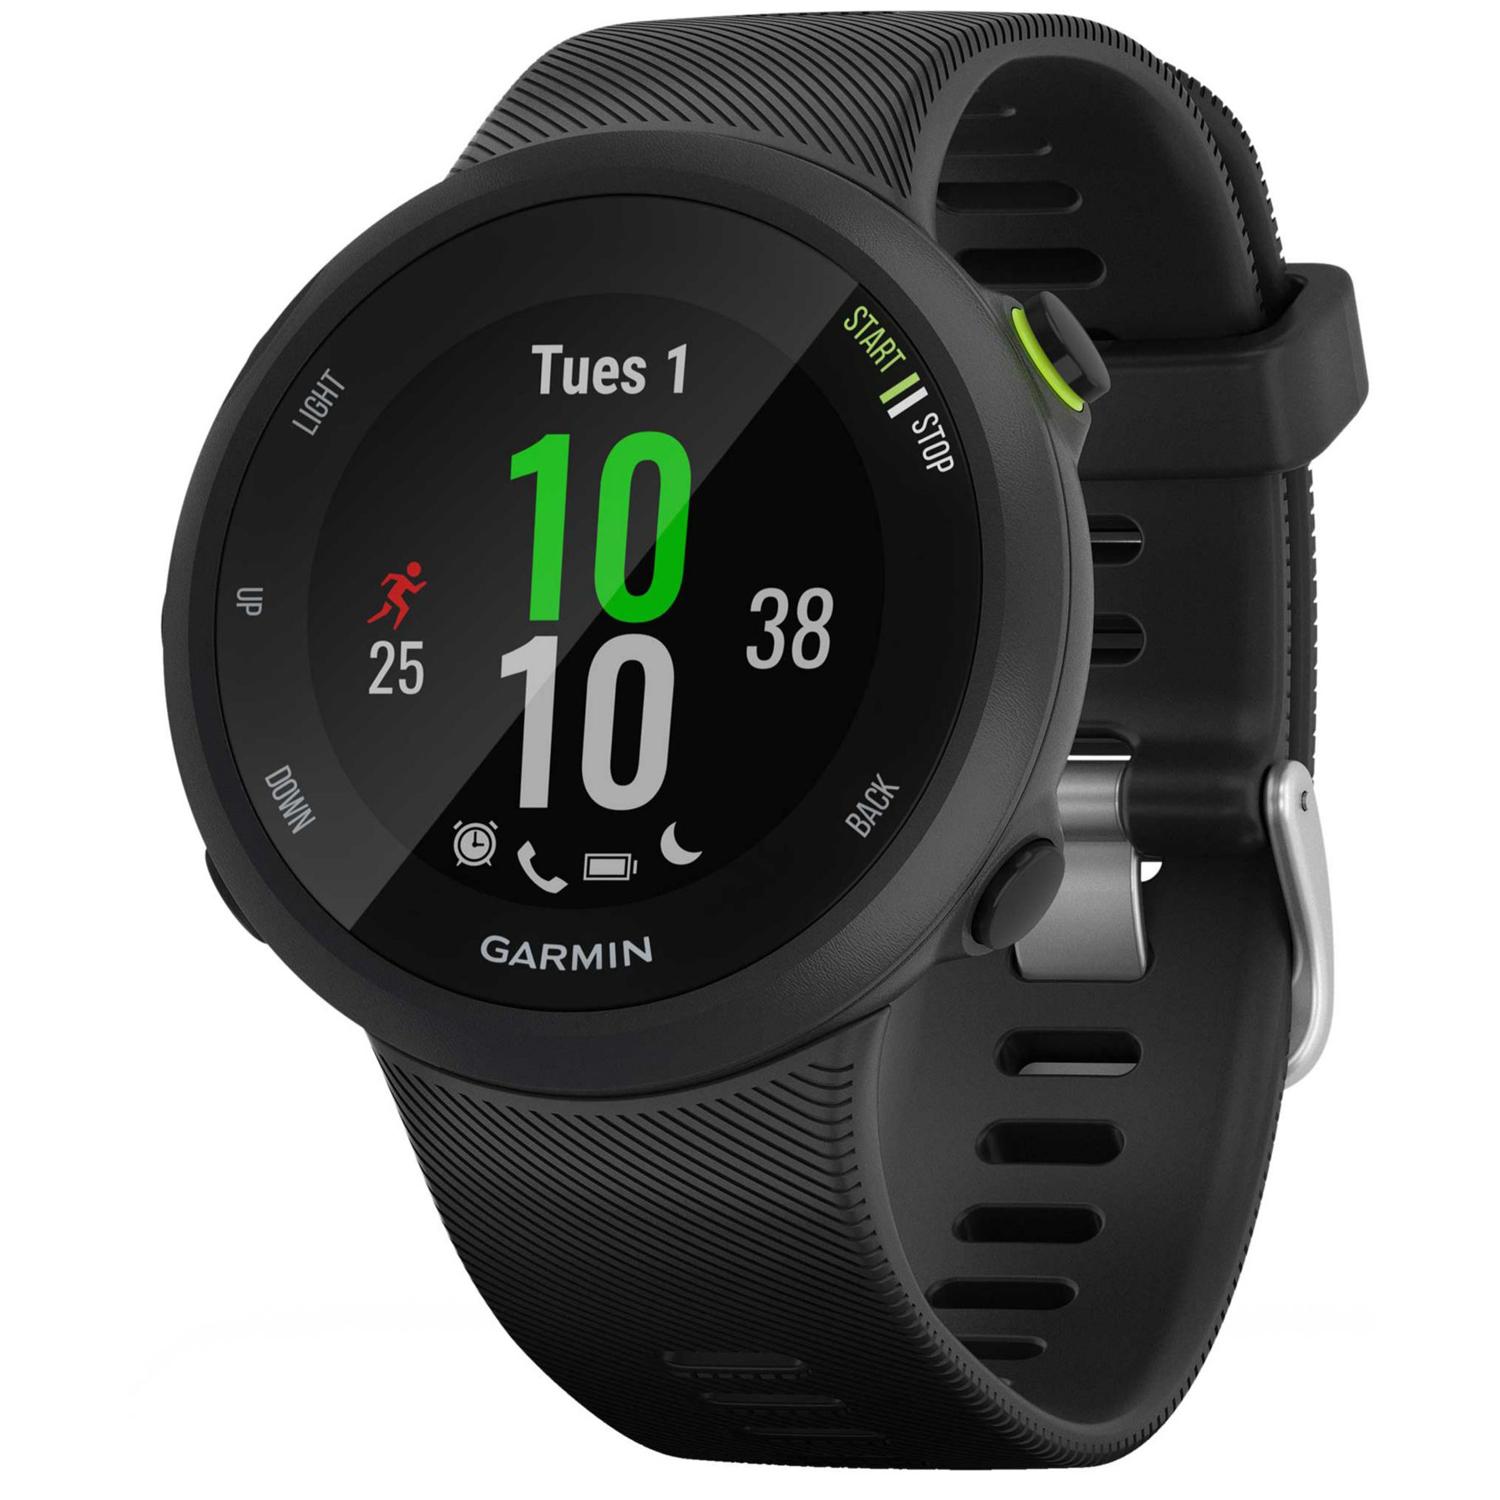 Garmin Forerunner 45 GPS Heart Rate Monitor Refurbished Smartwatch for $89.99 Shipped